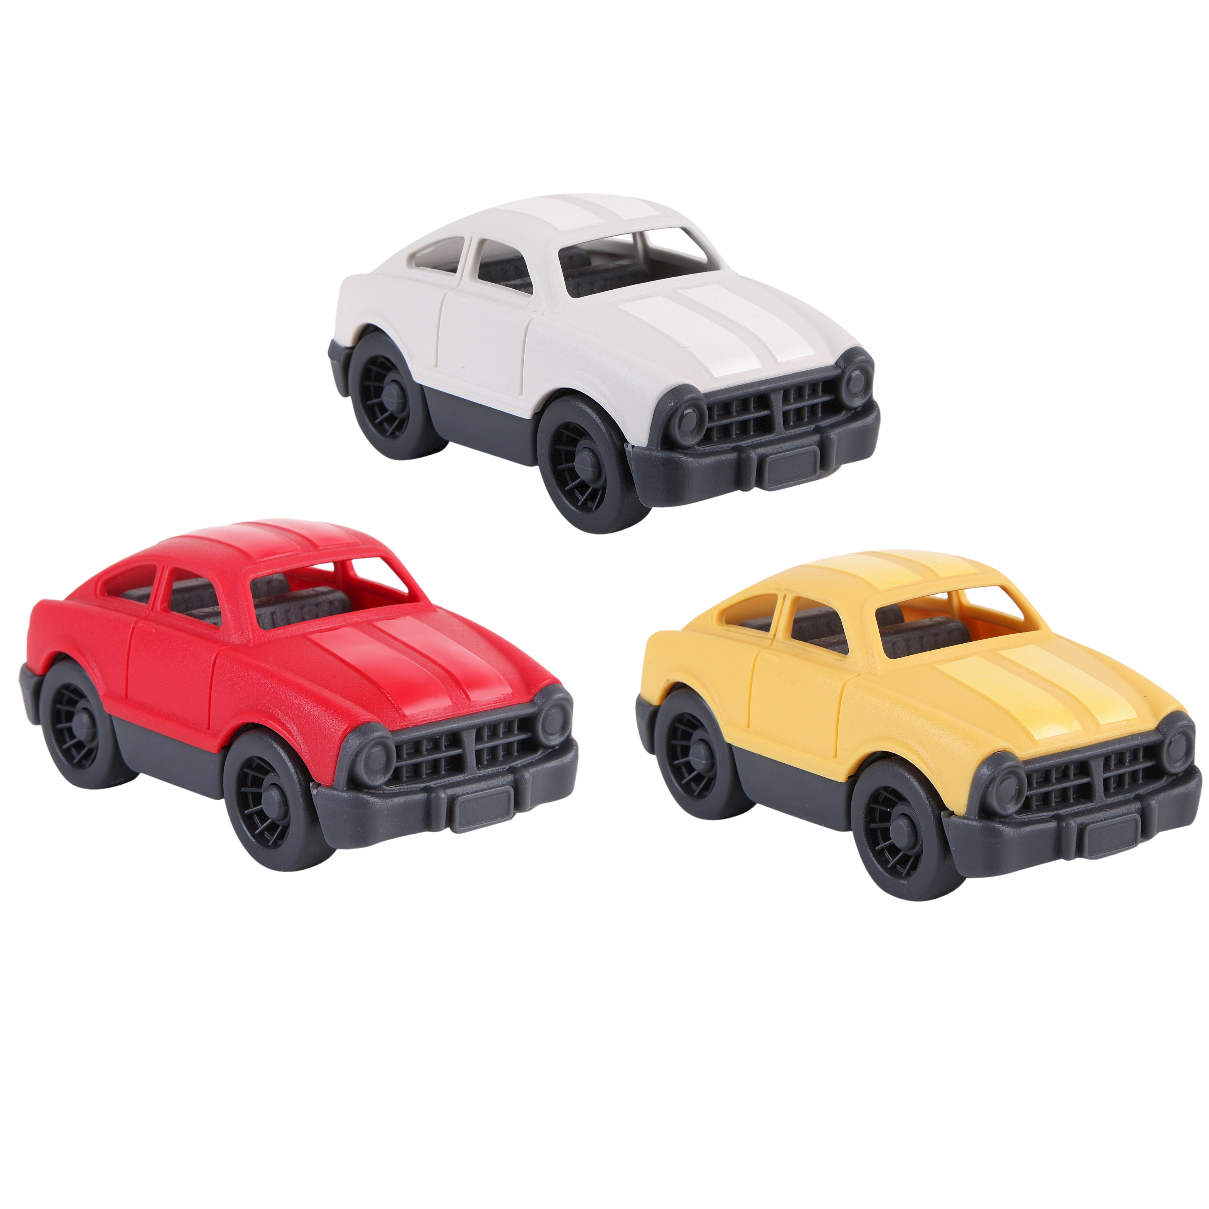 Let's Be Child - Red-White-Yellow Mini Cars (3pcs)